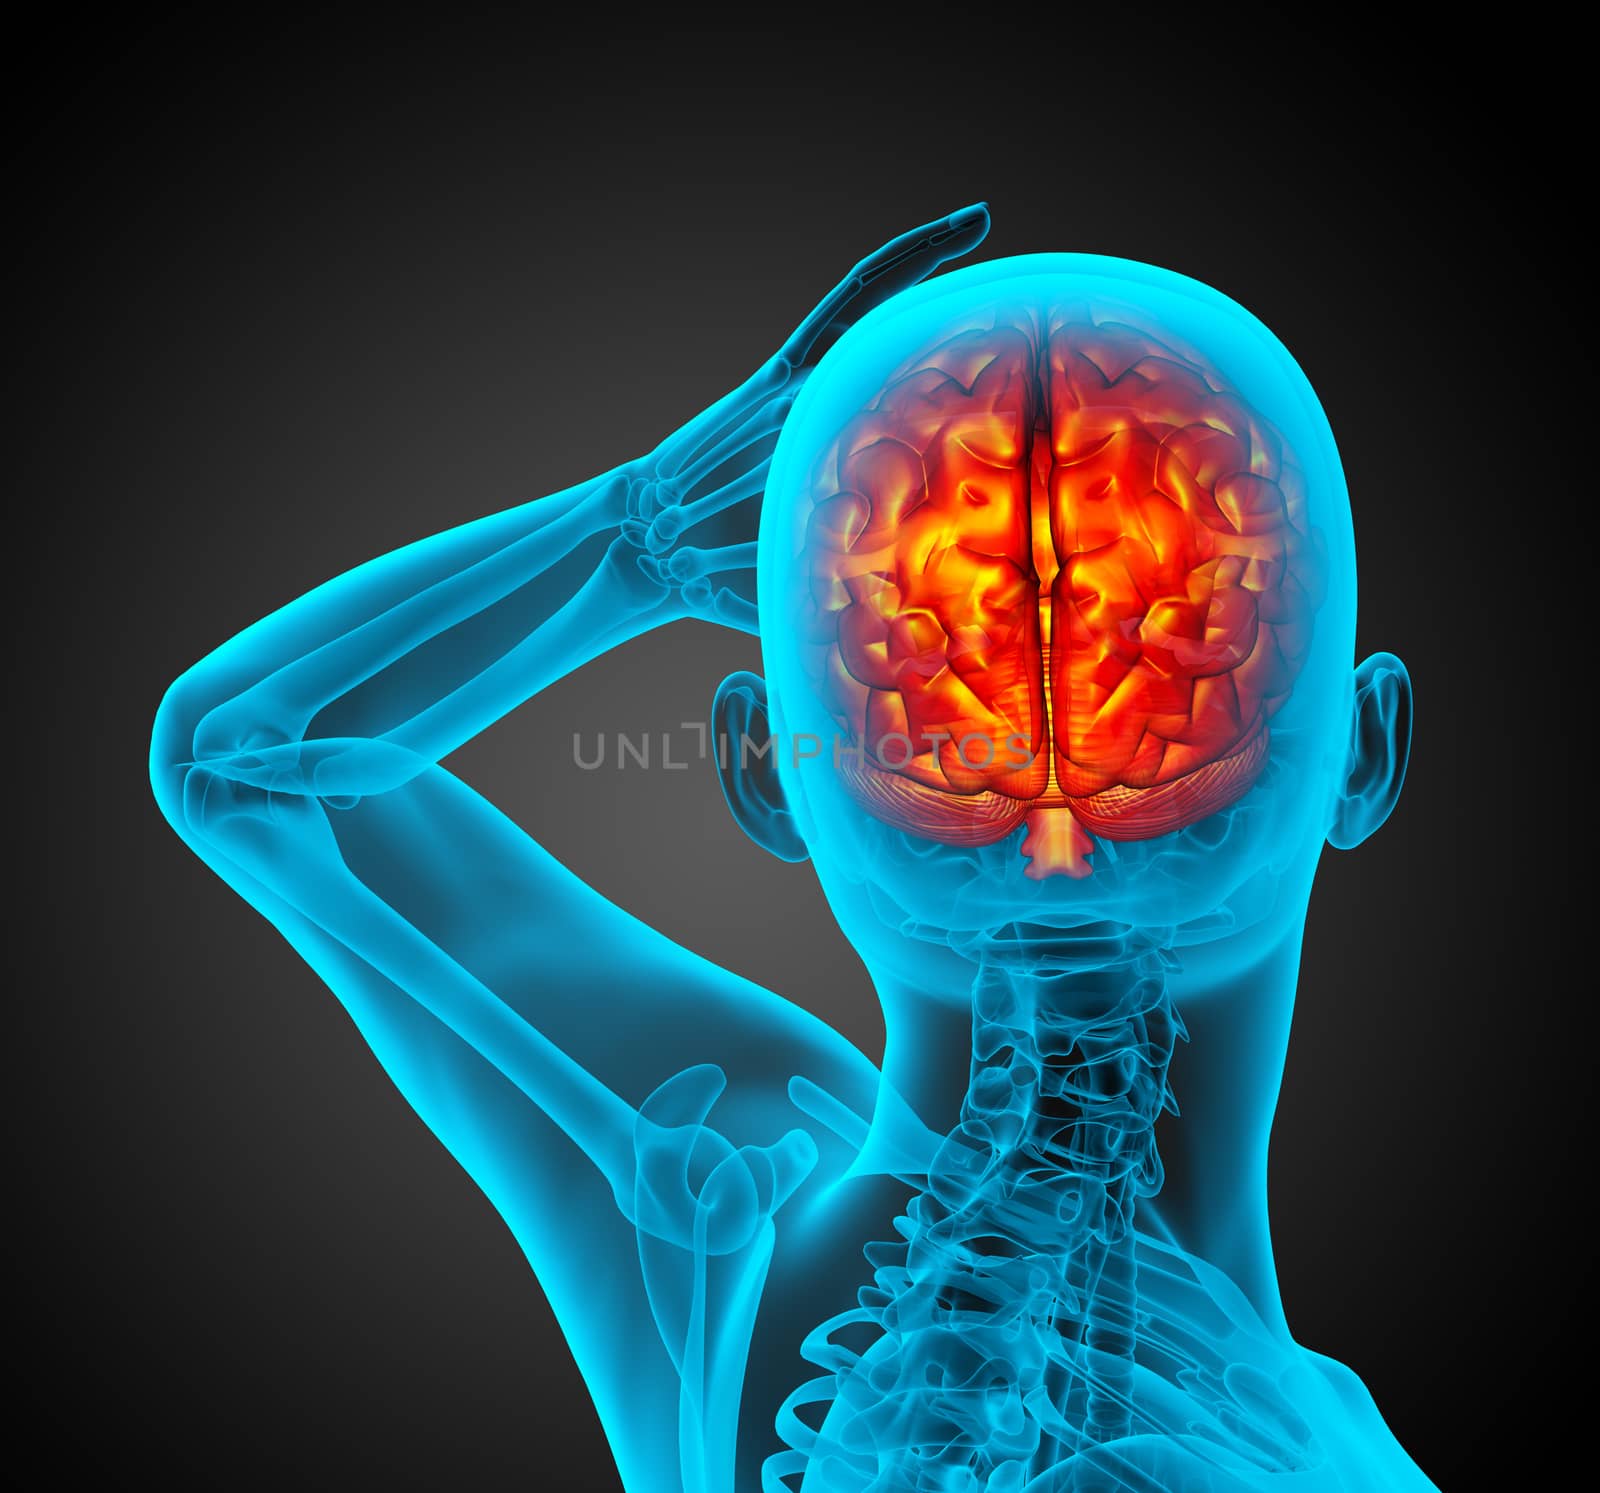 3d render medical illustration of the human brain by maya2008